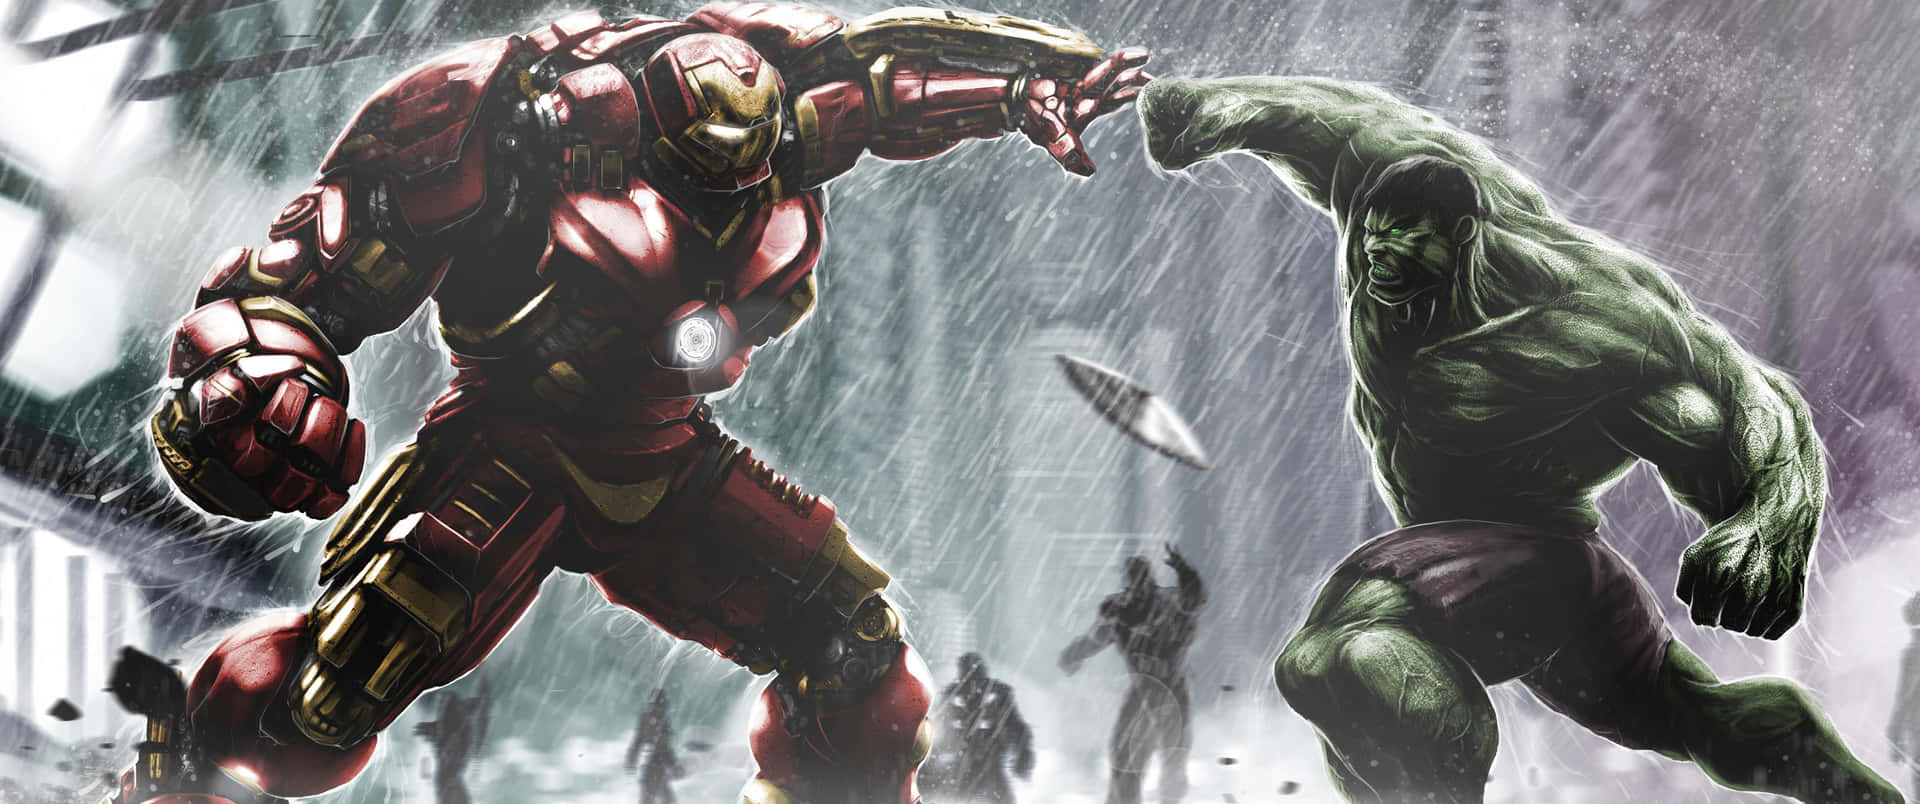 Hulkoch Iron Man Slåss I Regnet.